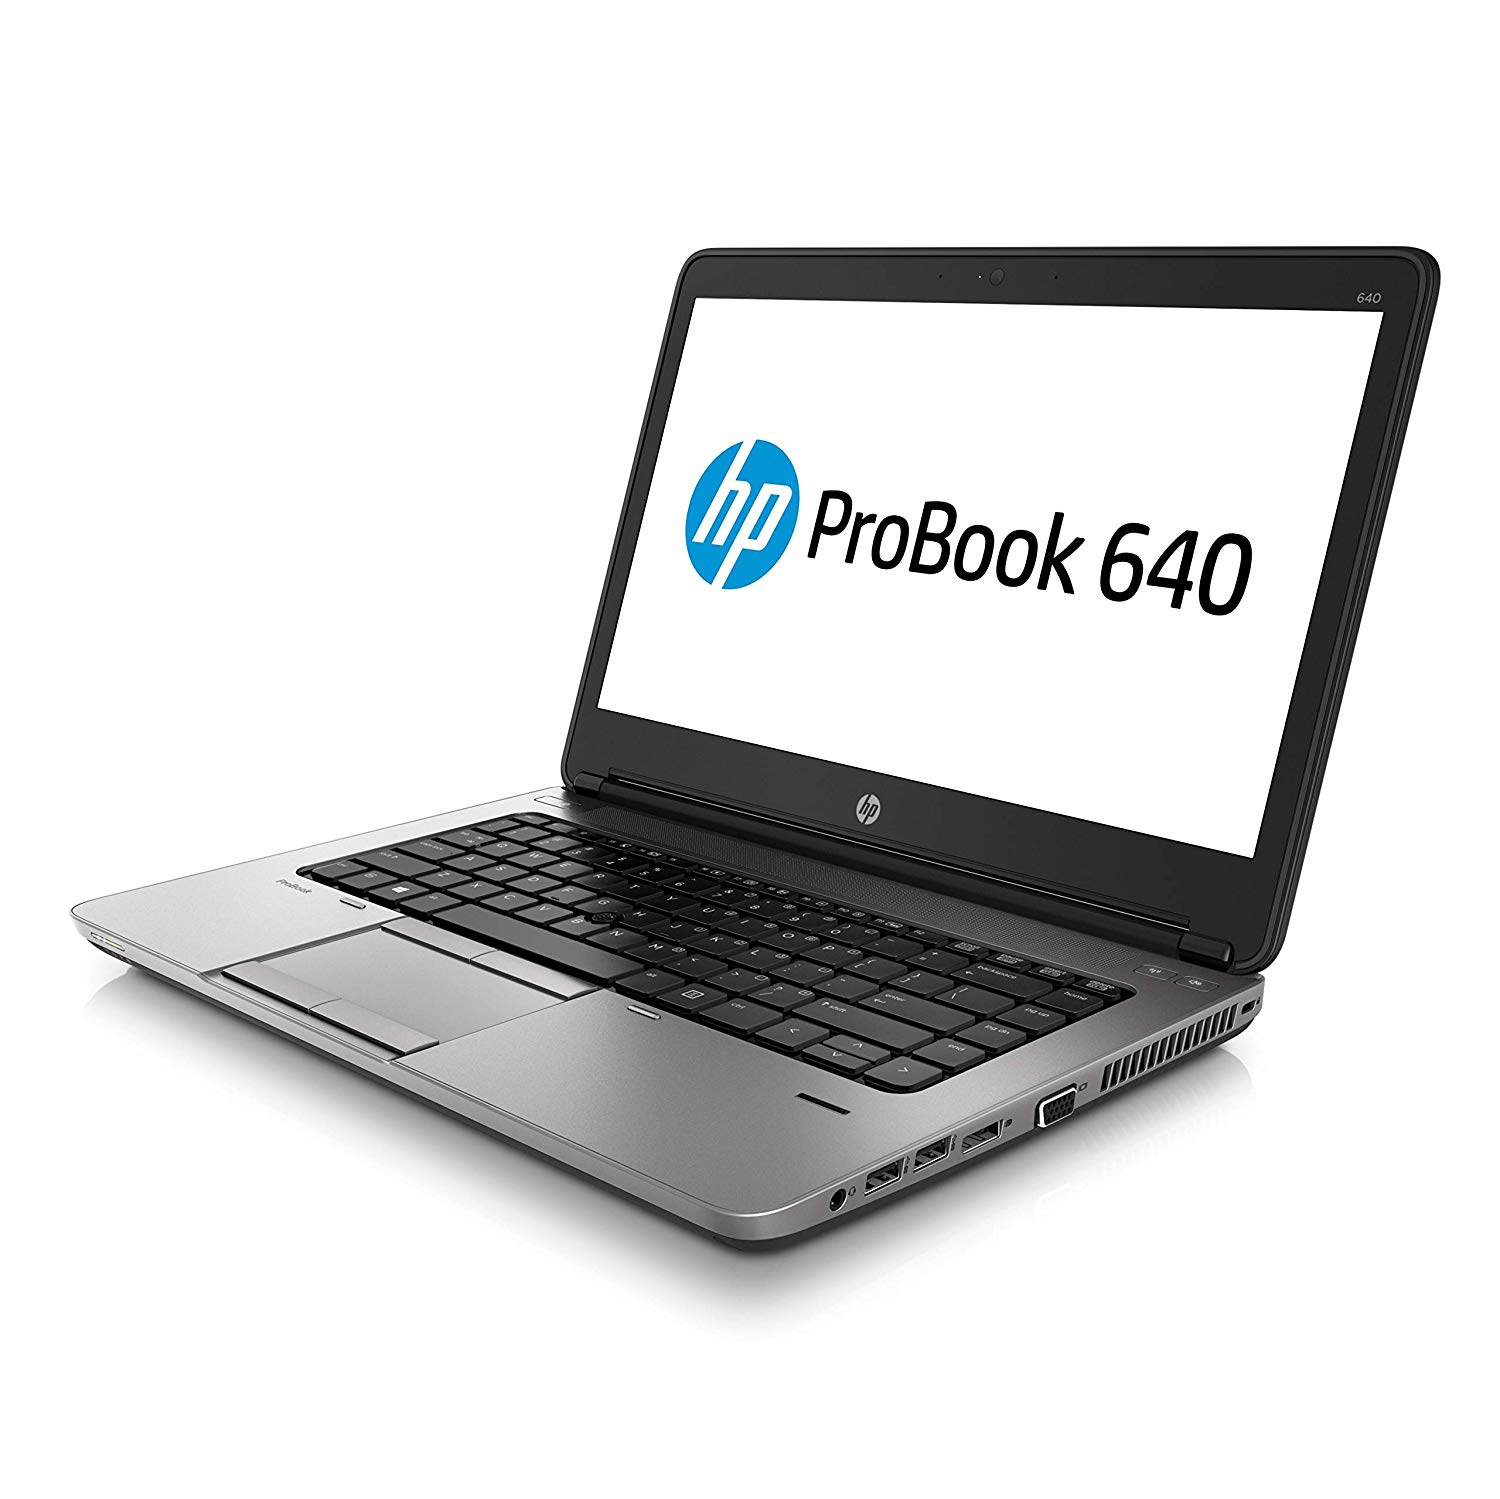 Refurbished (Good) - HP ProBook 640 G1 Laptop: Intel Core i5 - 4210M 2.60GHz, 8GB RAM, 256GB SSD, 14"Â, Webcam, DVDRW, Win 11 Home